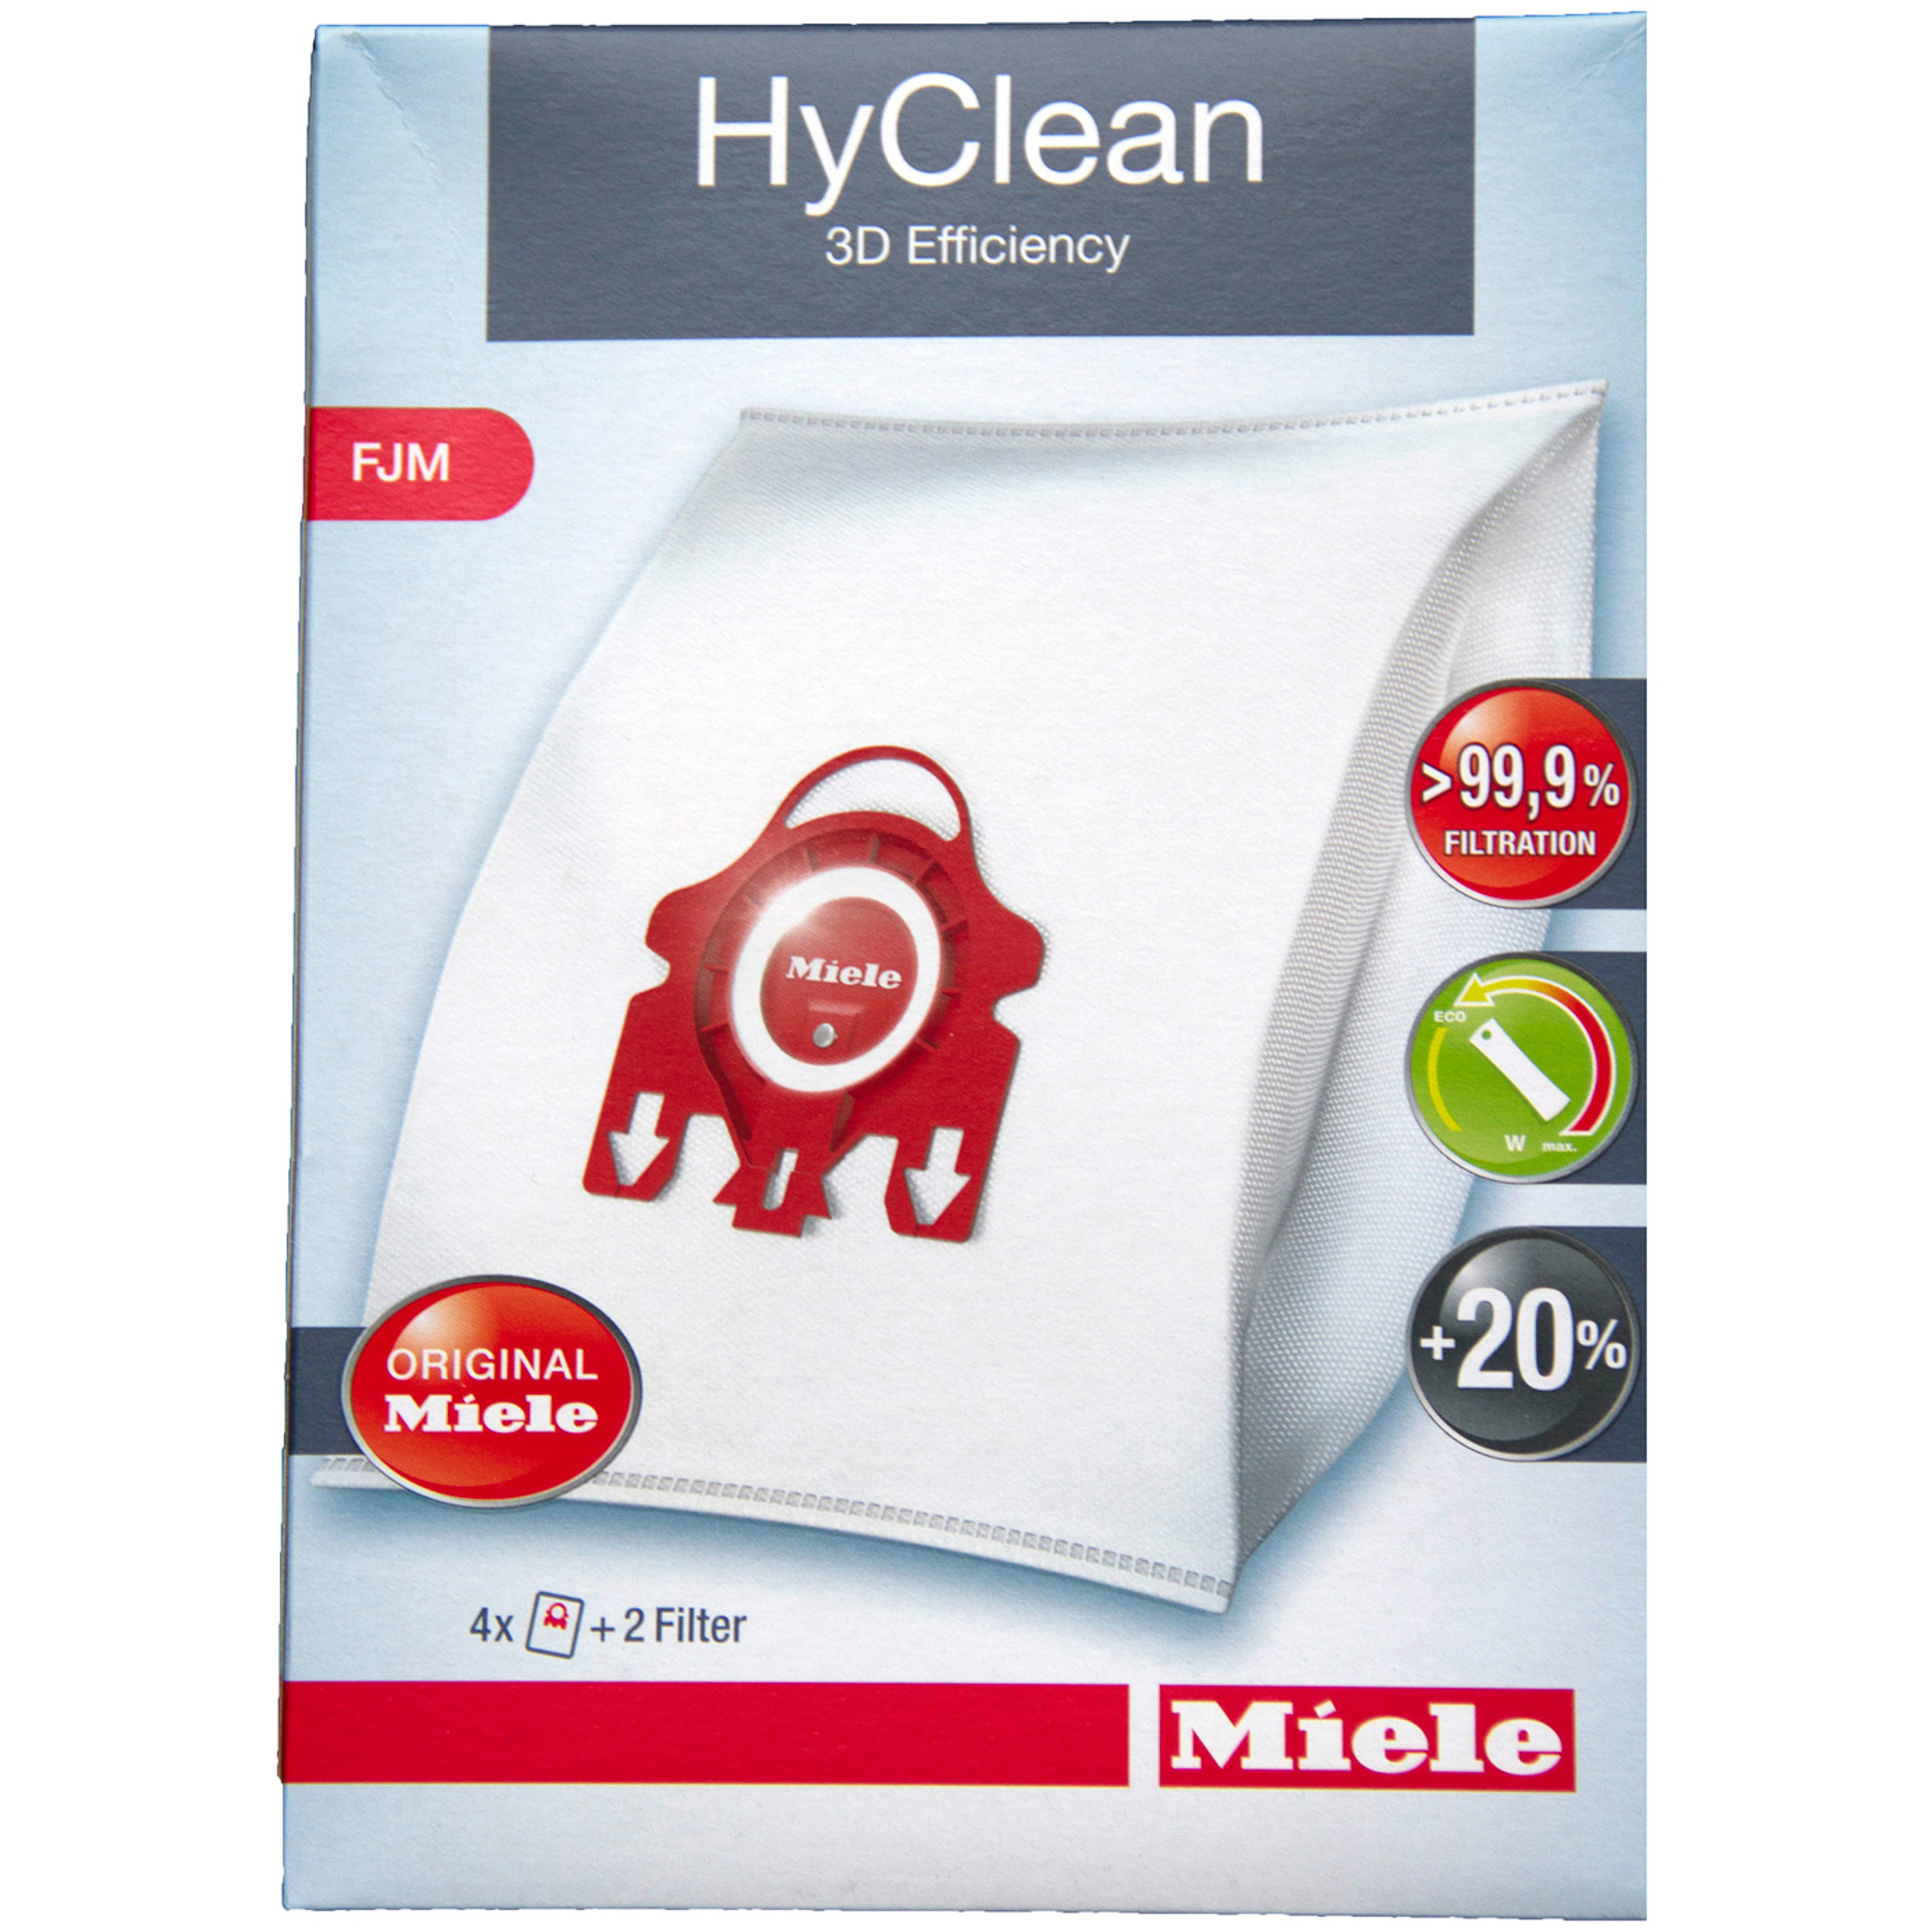 Пылесборник Miele FJM HyClean 3D Efficiency аксессуар miele пылесбор мешок xxl pack gn hyclean 3d